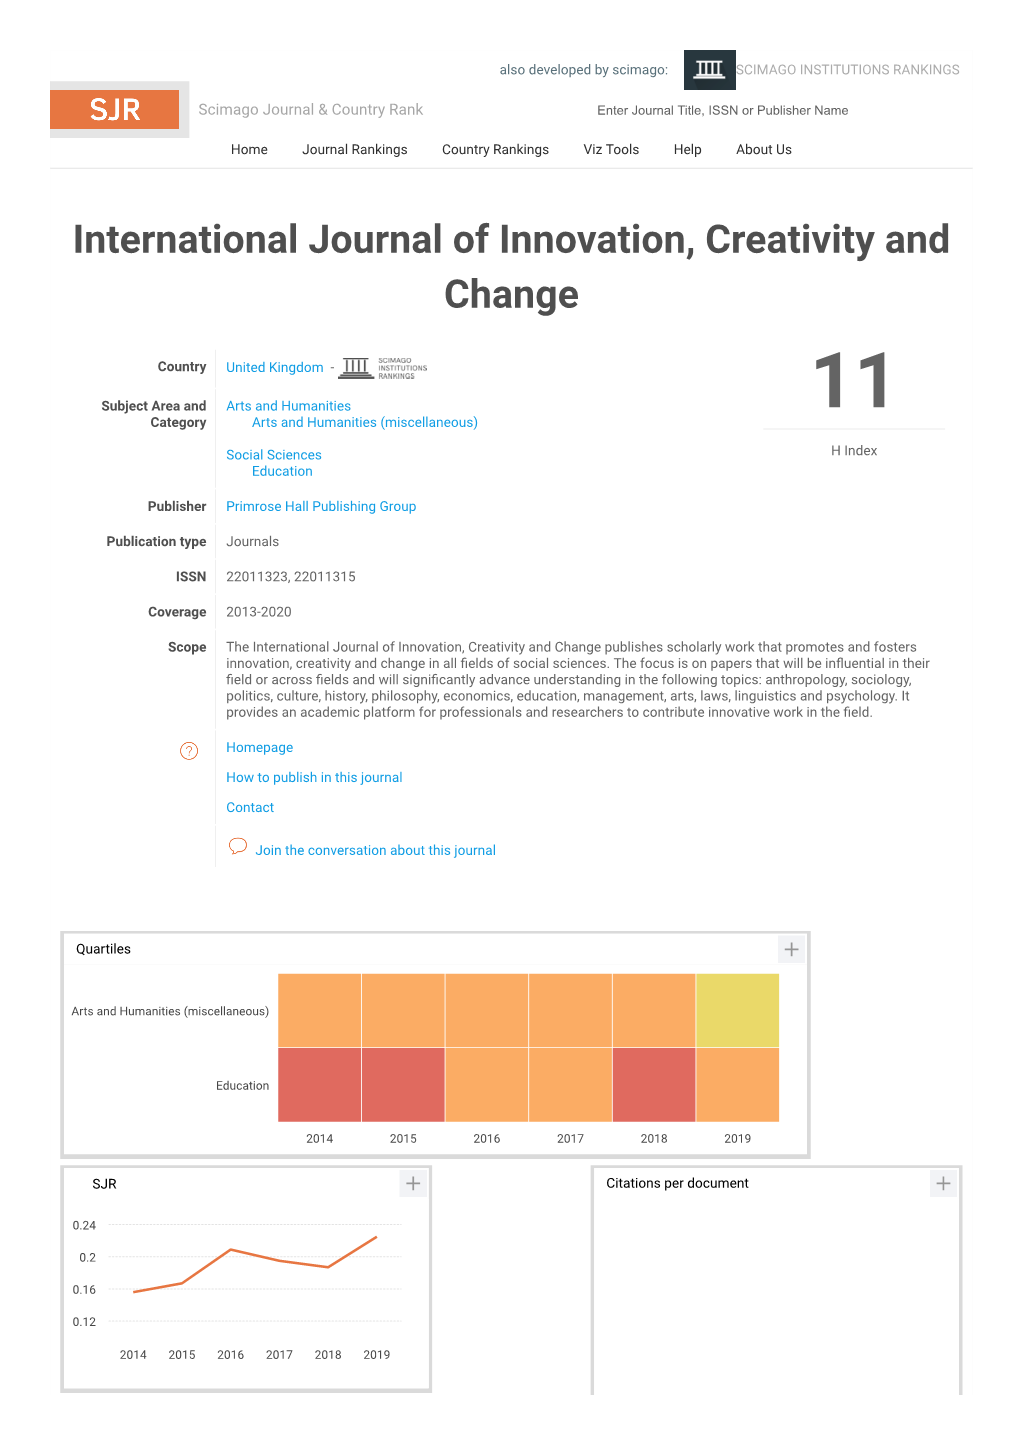 International Journal of Innovation, Creativity and Change